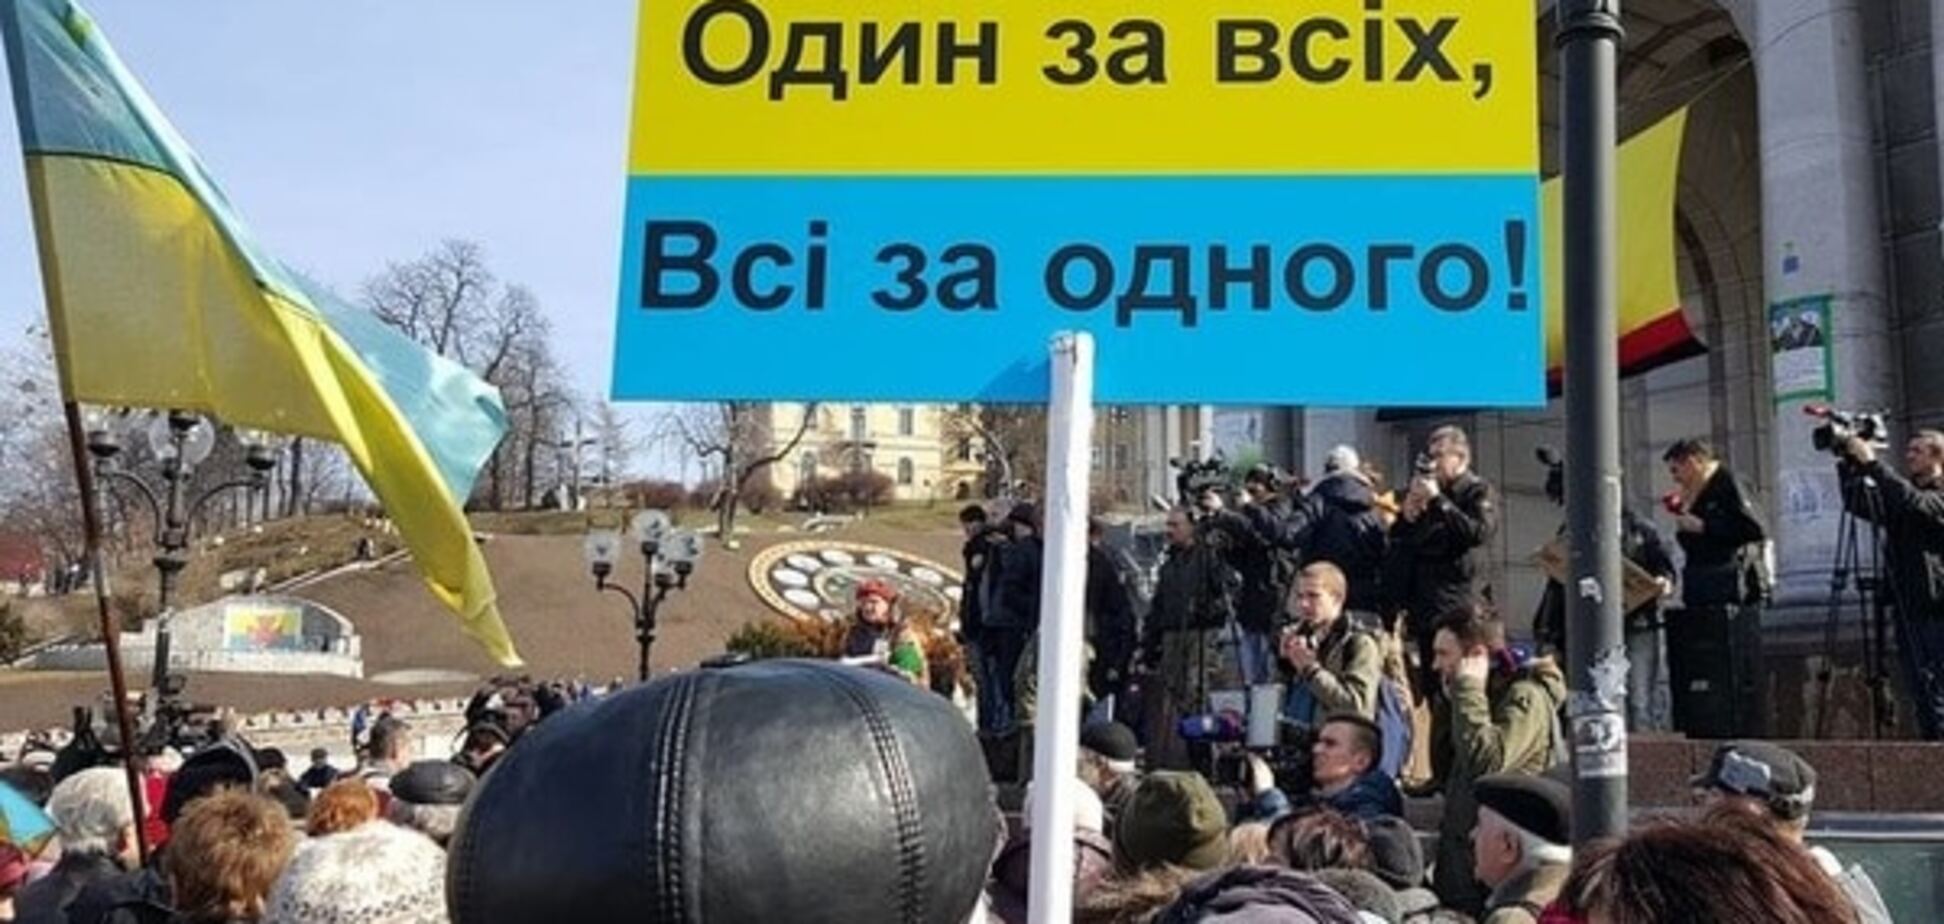 Кто устроил манипуляции на акции в поддержку Савченко